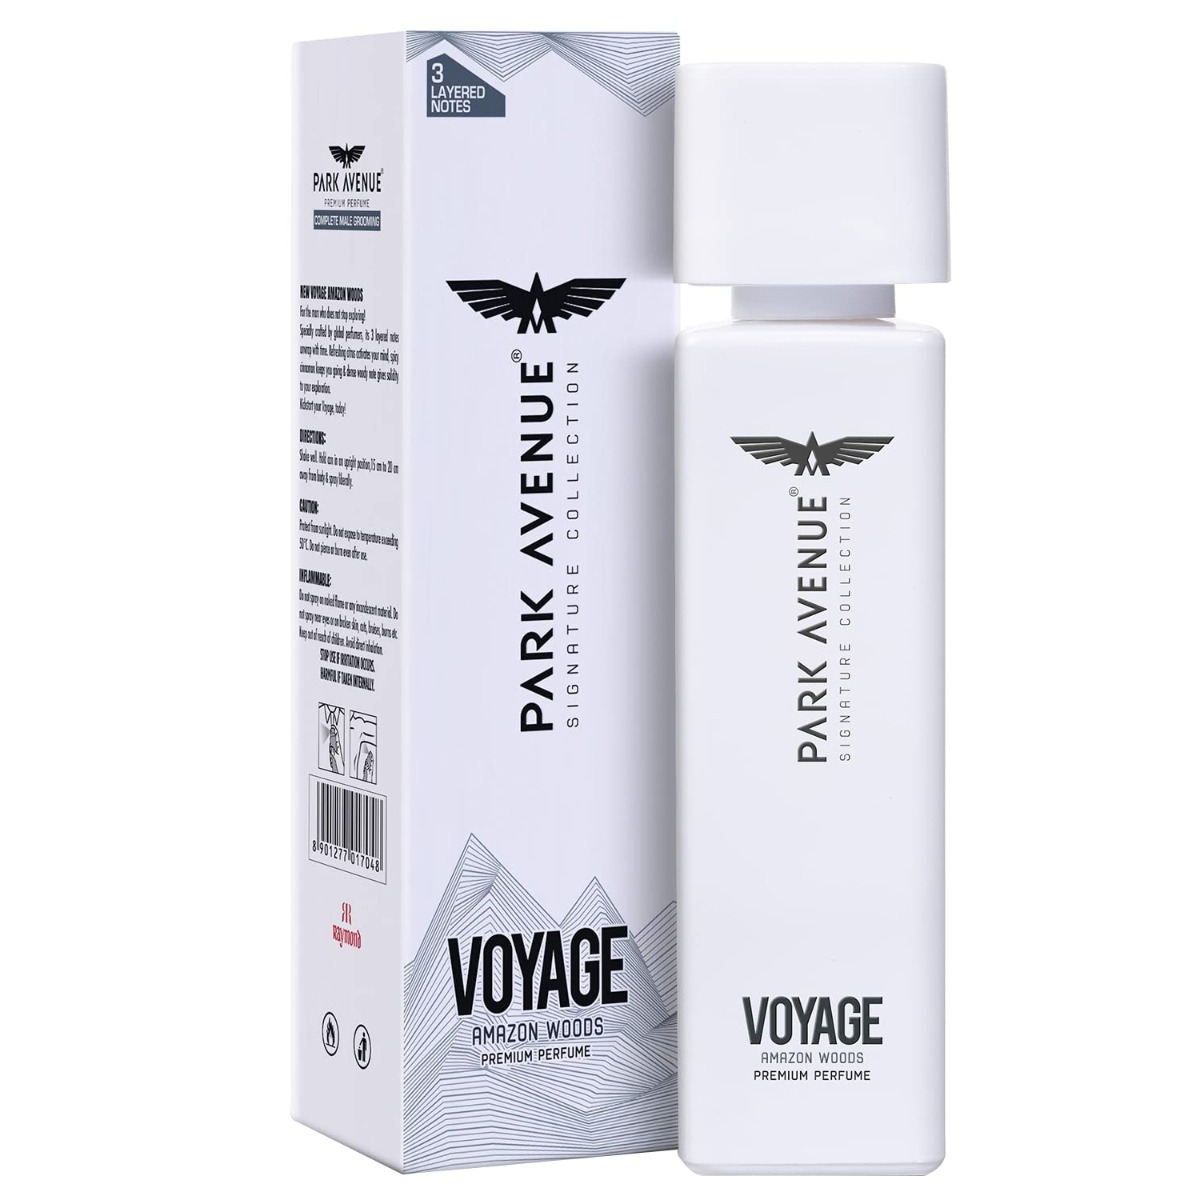 Park Avenue Voyage Amazon Woods Premium Perfume, 120ml